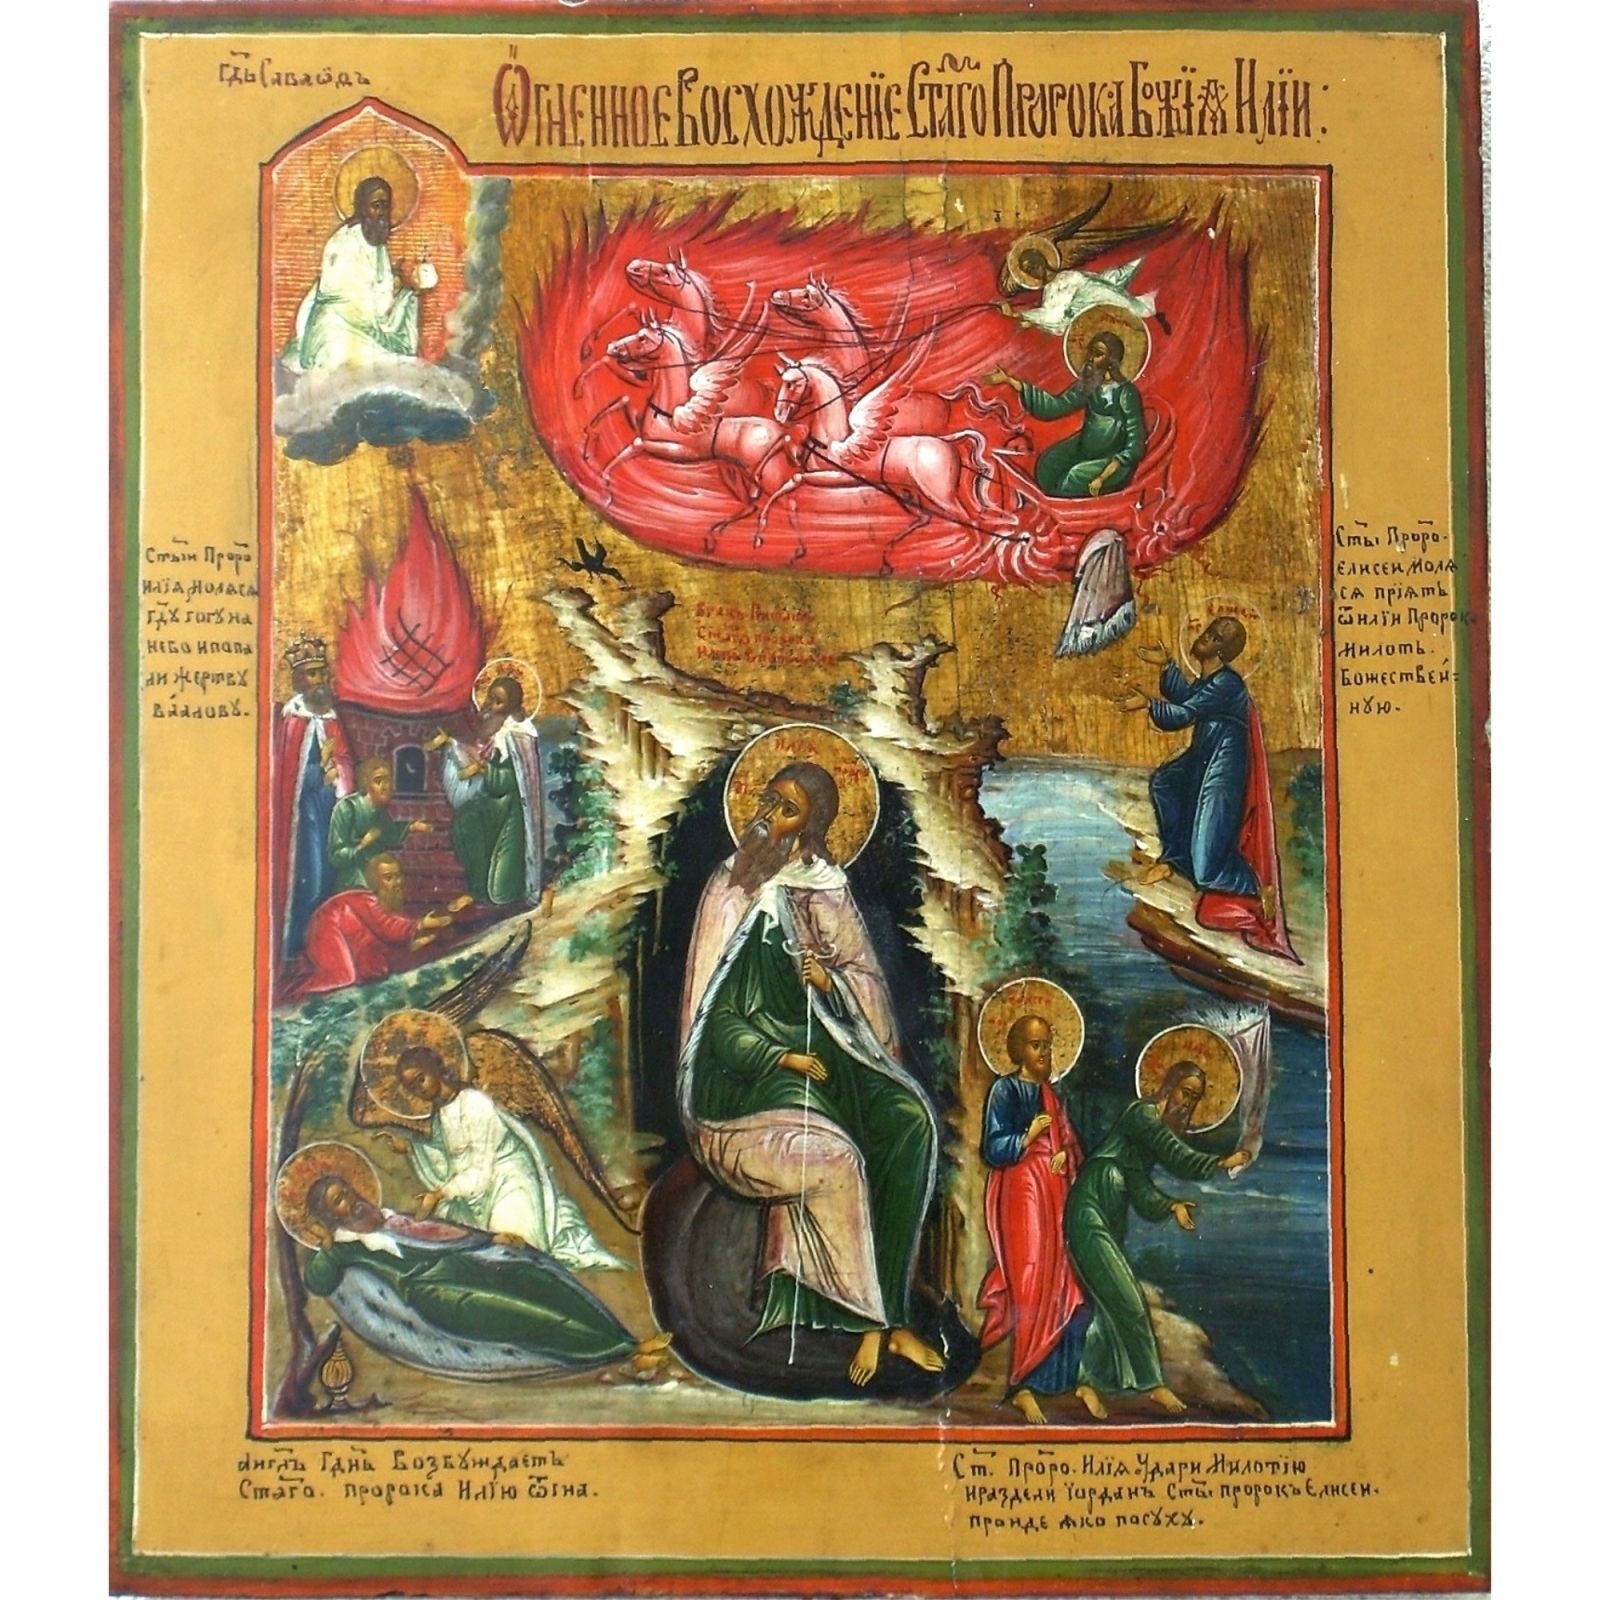 Null 俄罗斯圣像描绘的是 "先知以利亚的火焰升天与生活场景"。俄罗斯中北部，18世纪末。蛋彩画，以米色为背景。Cm 36 x 32.